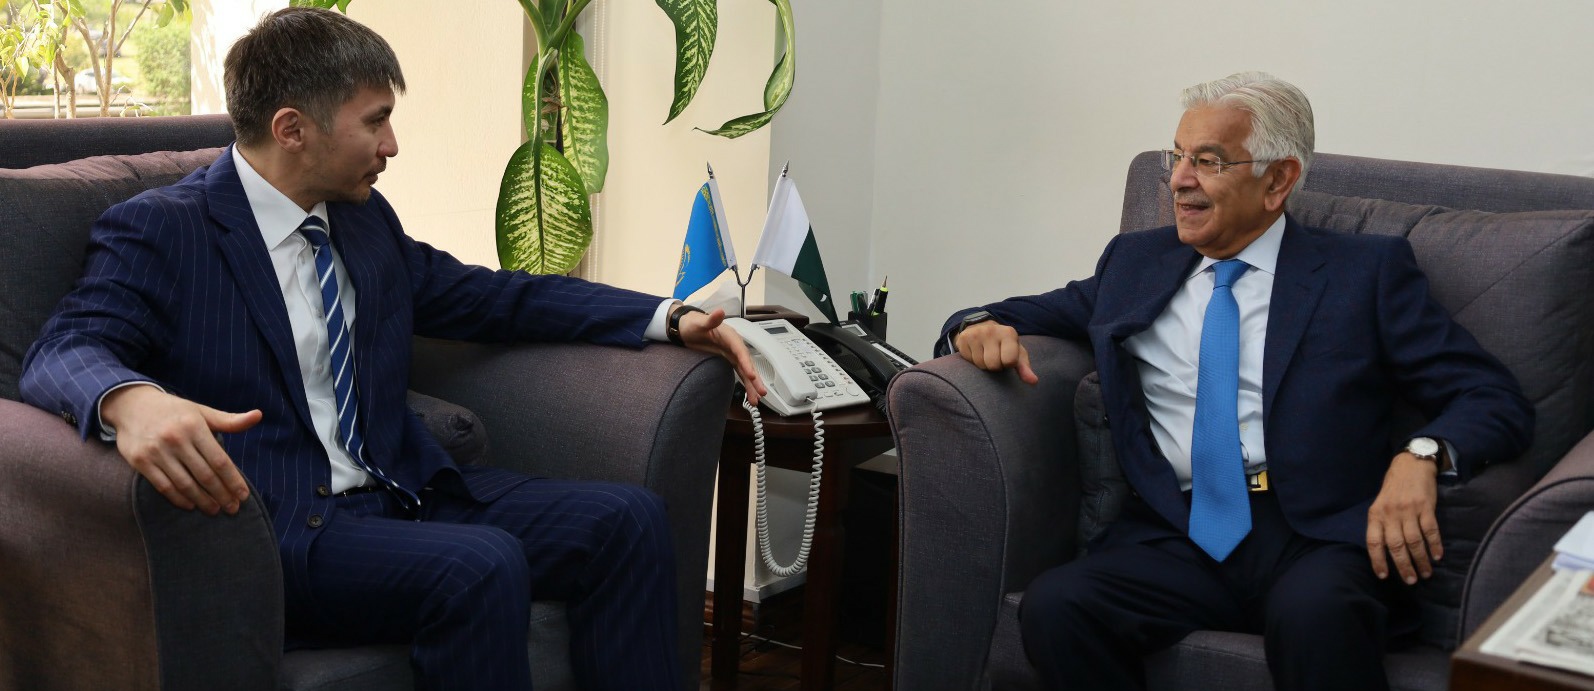 H.E Mr. Yerzhan Kistafin, Ambassador of the Republic of Kazakhstan called on Minister for Defence Asif.